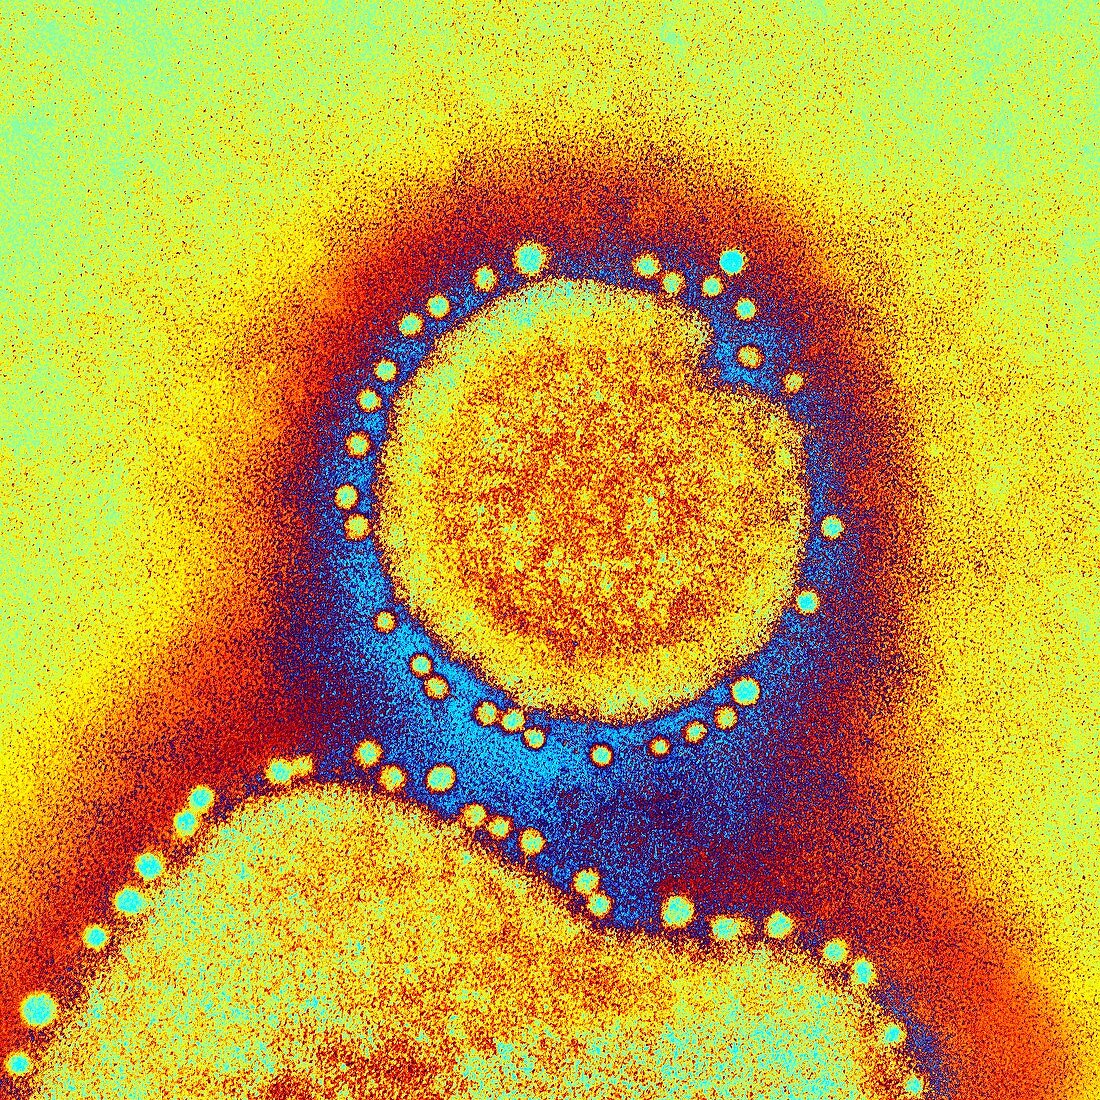 Avian influenza virus H7N9,TEM